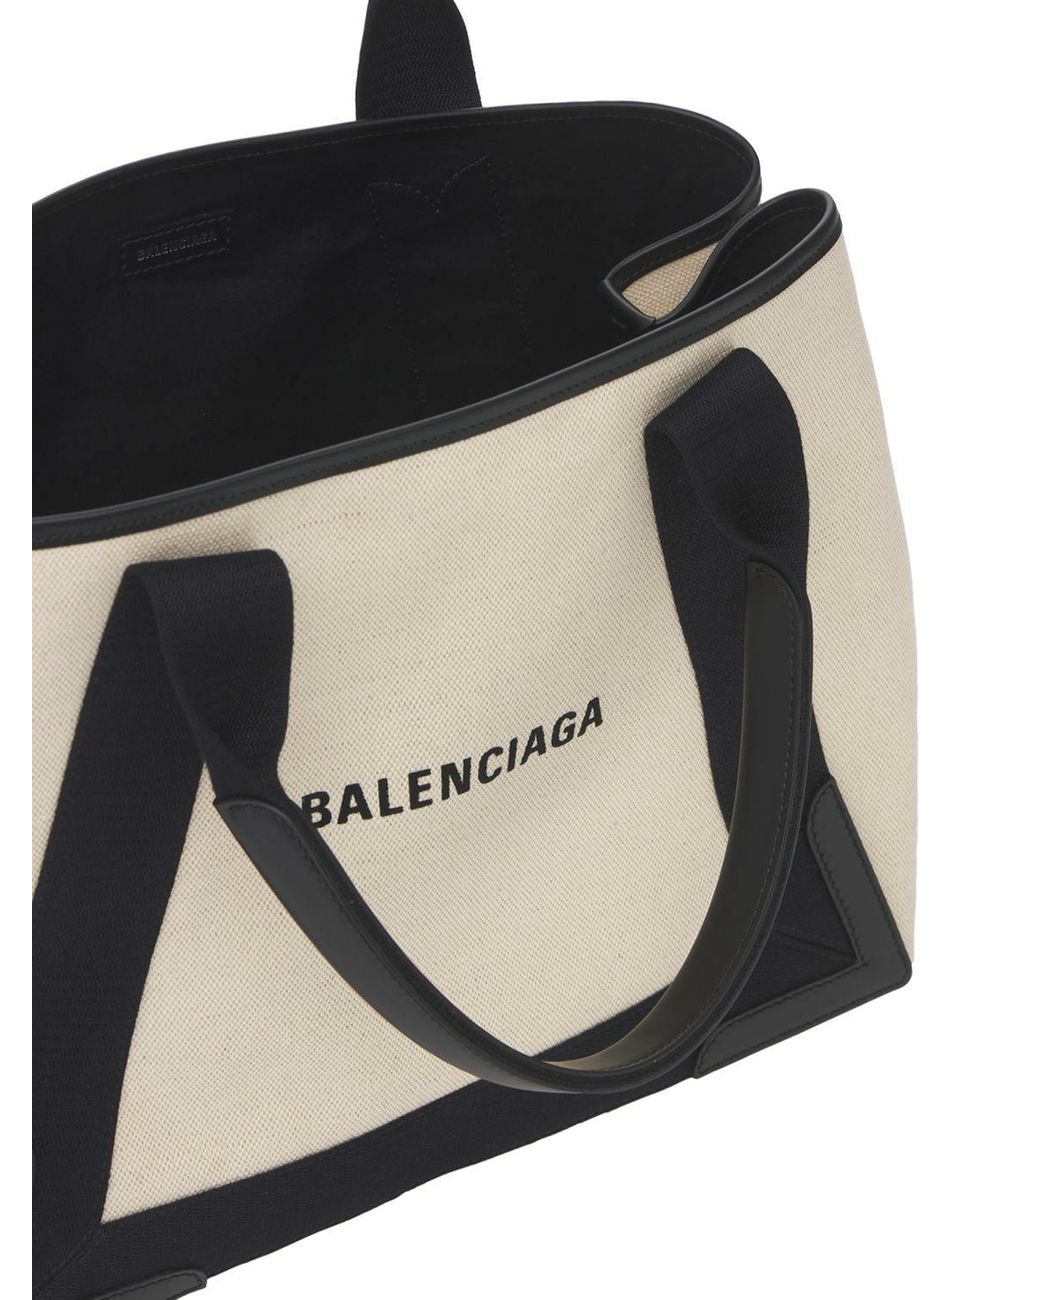 Balenciaga New Md Navy Cabas Canvas Tote Bag in Black | Lyst